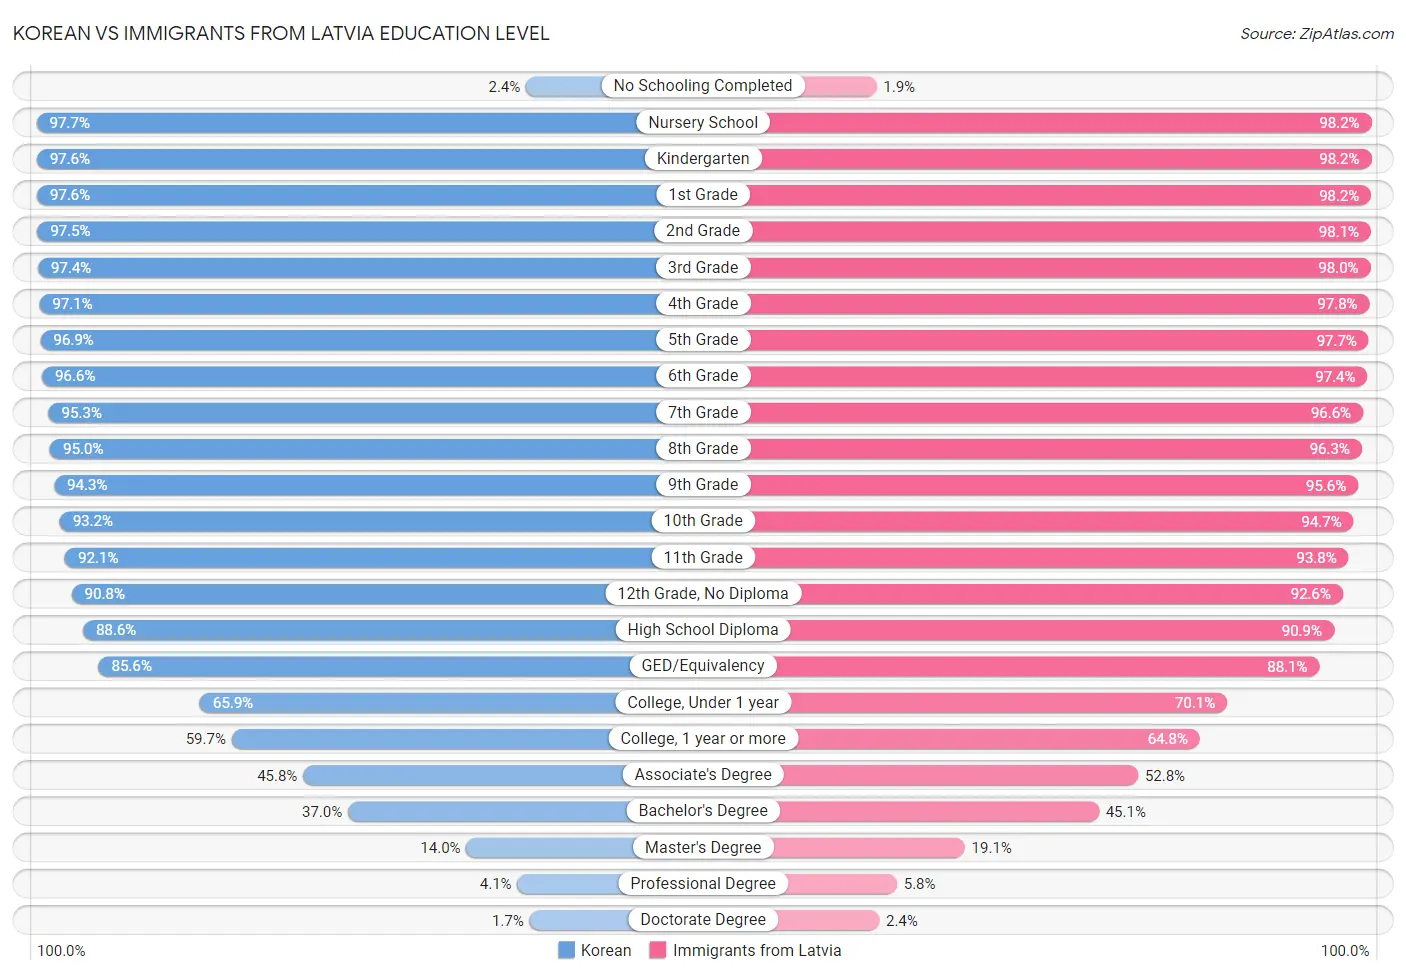 Korean vs Immigrants from Latvia Education Level